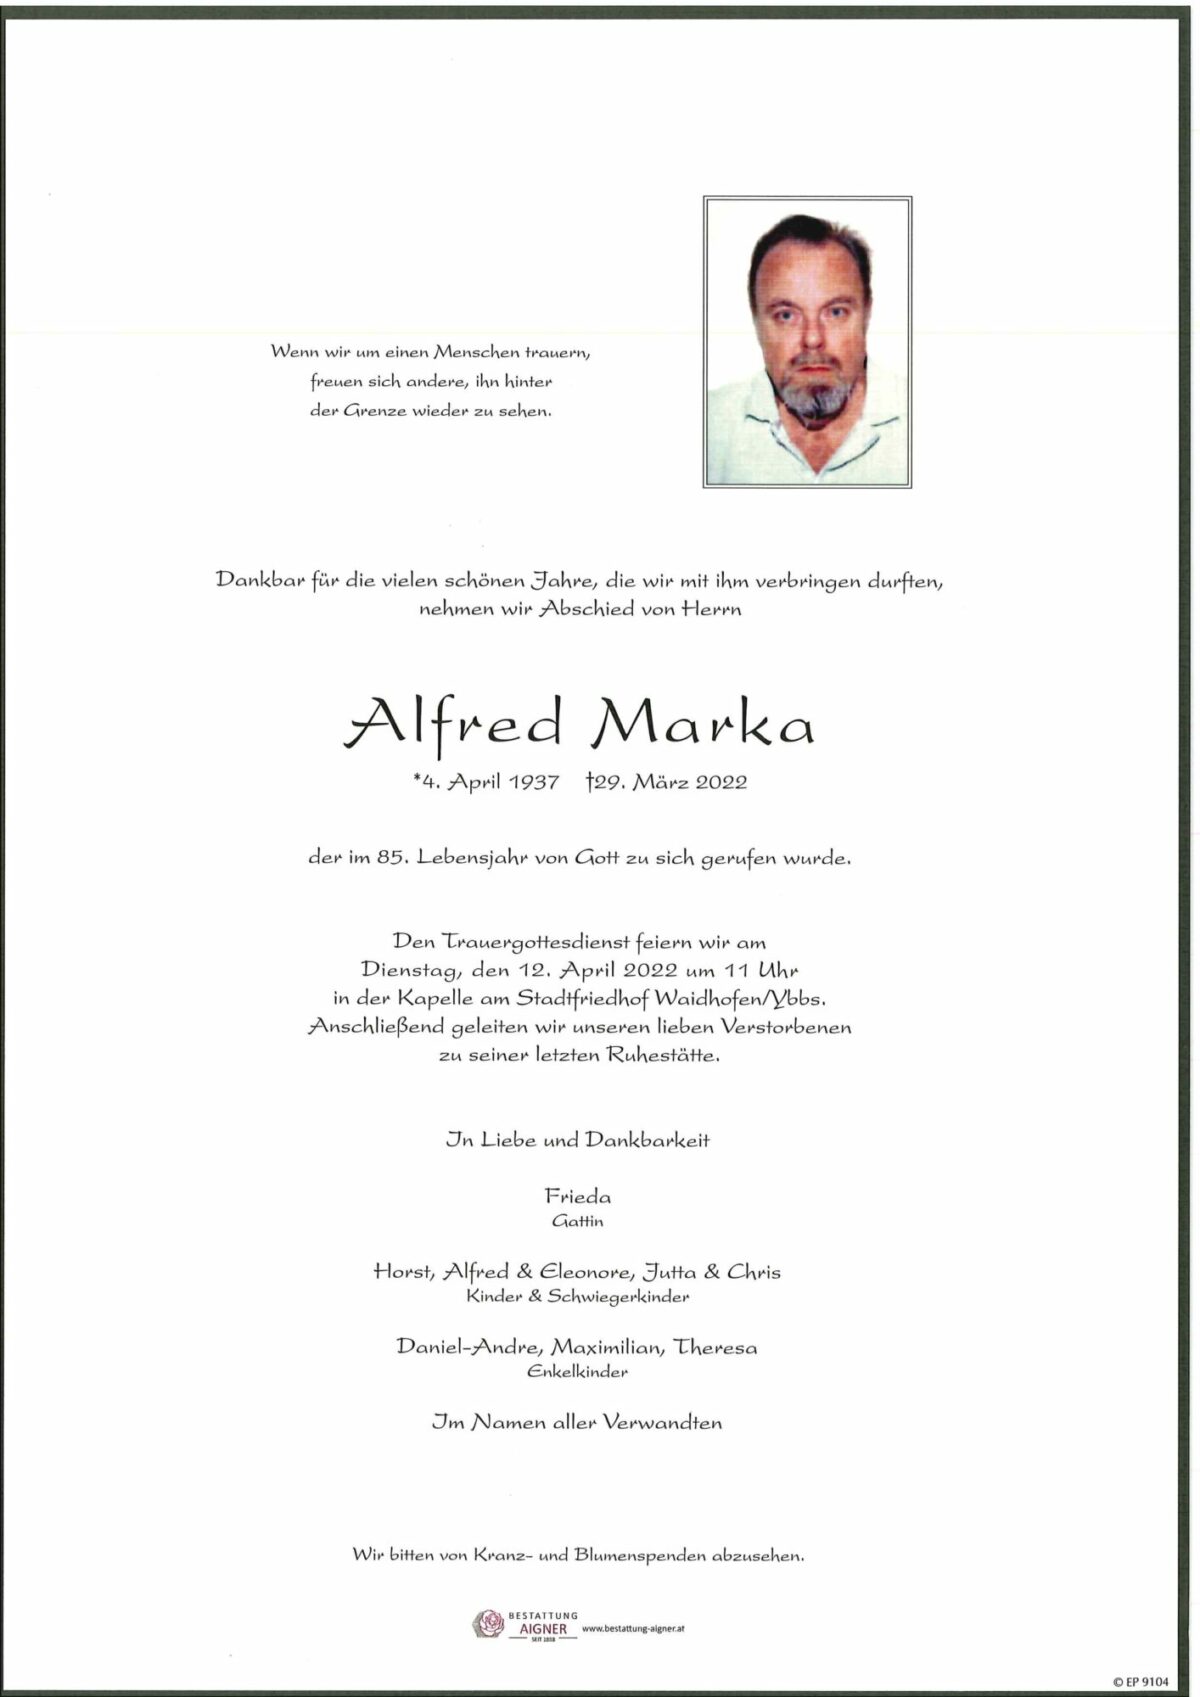 Alfred Marka